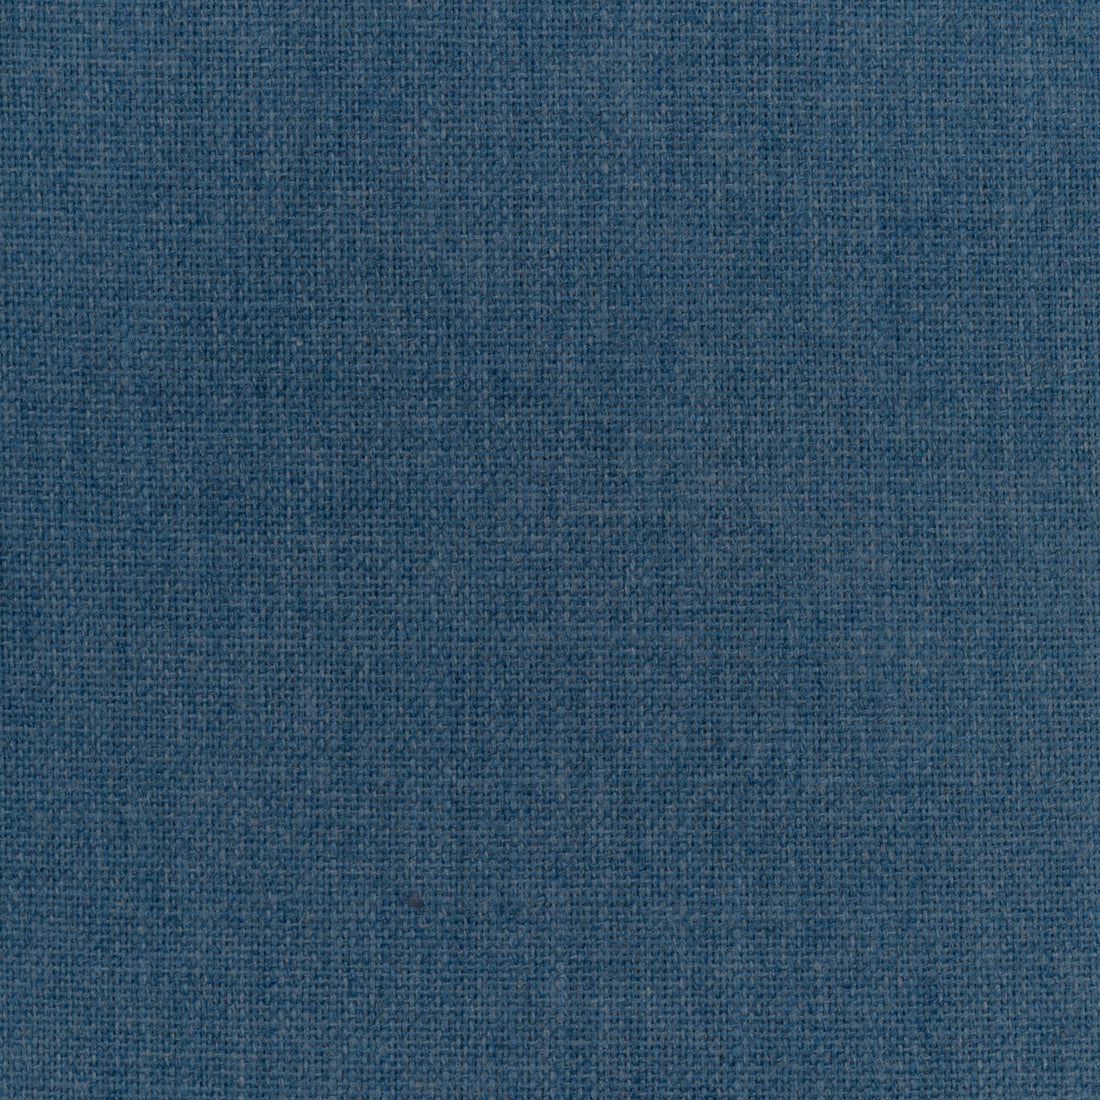 Kravet Smart fabric in 36112-550 color - pattern 36112.550.0 - by Kravet Smart in the Performance Kravetarmor collection